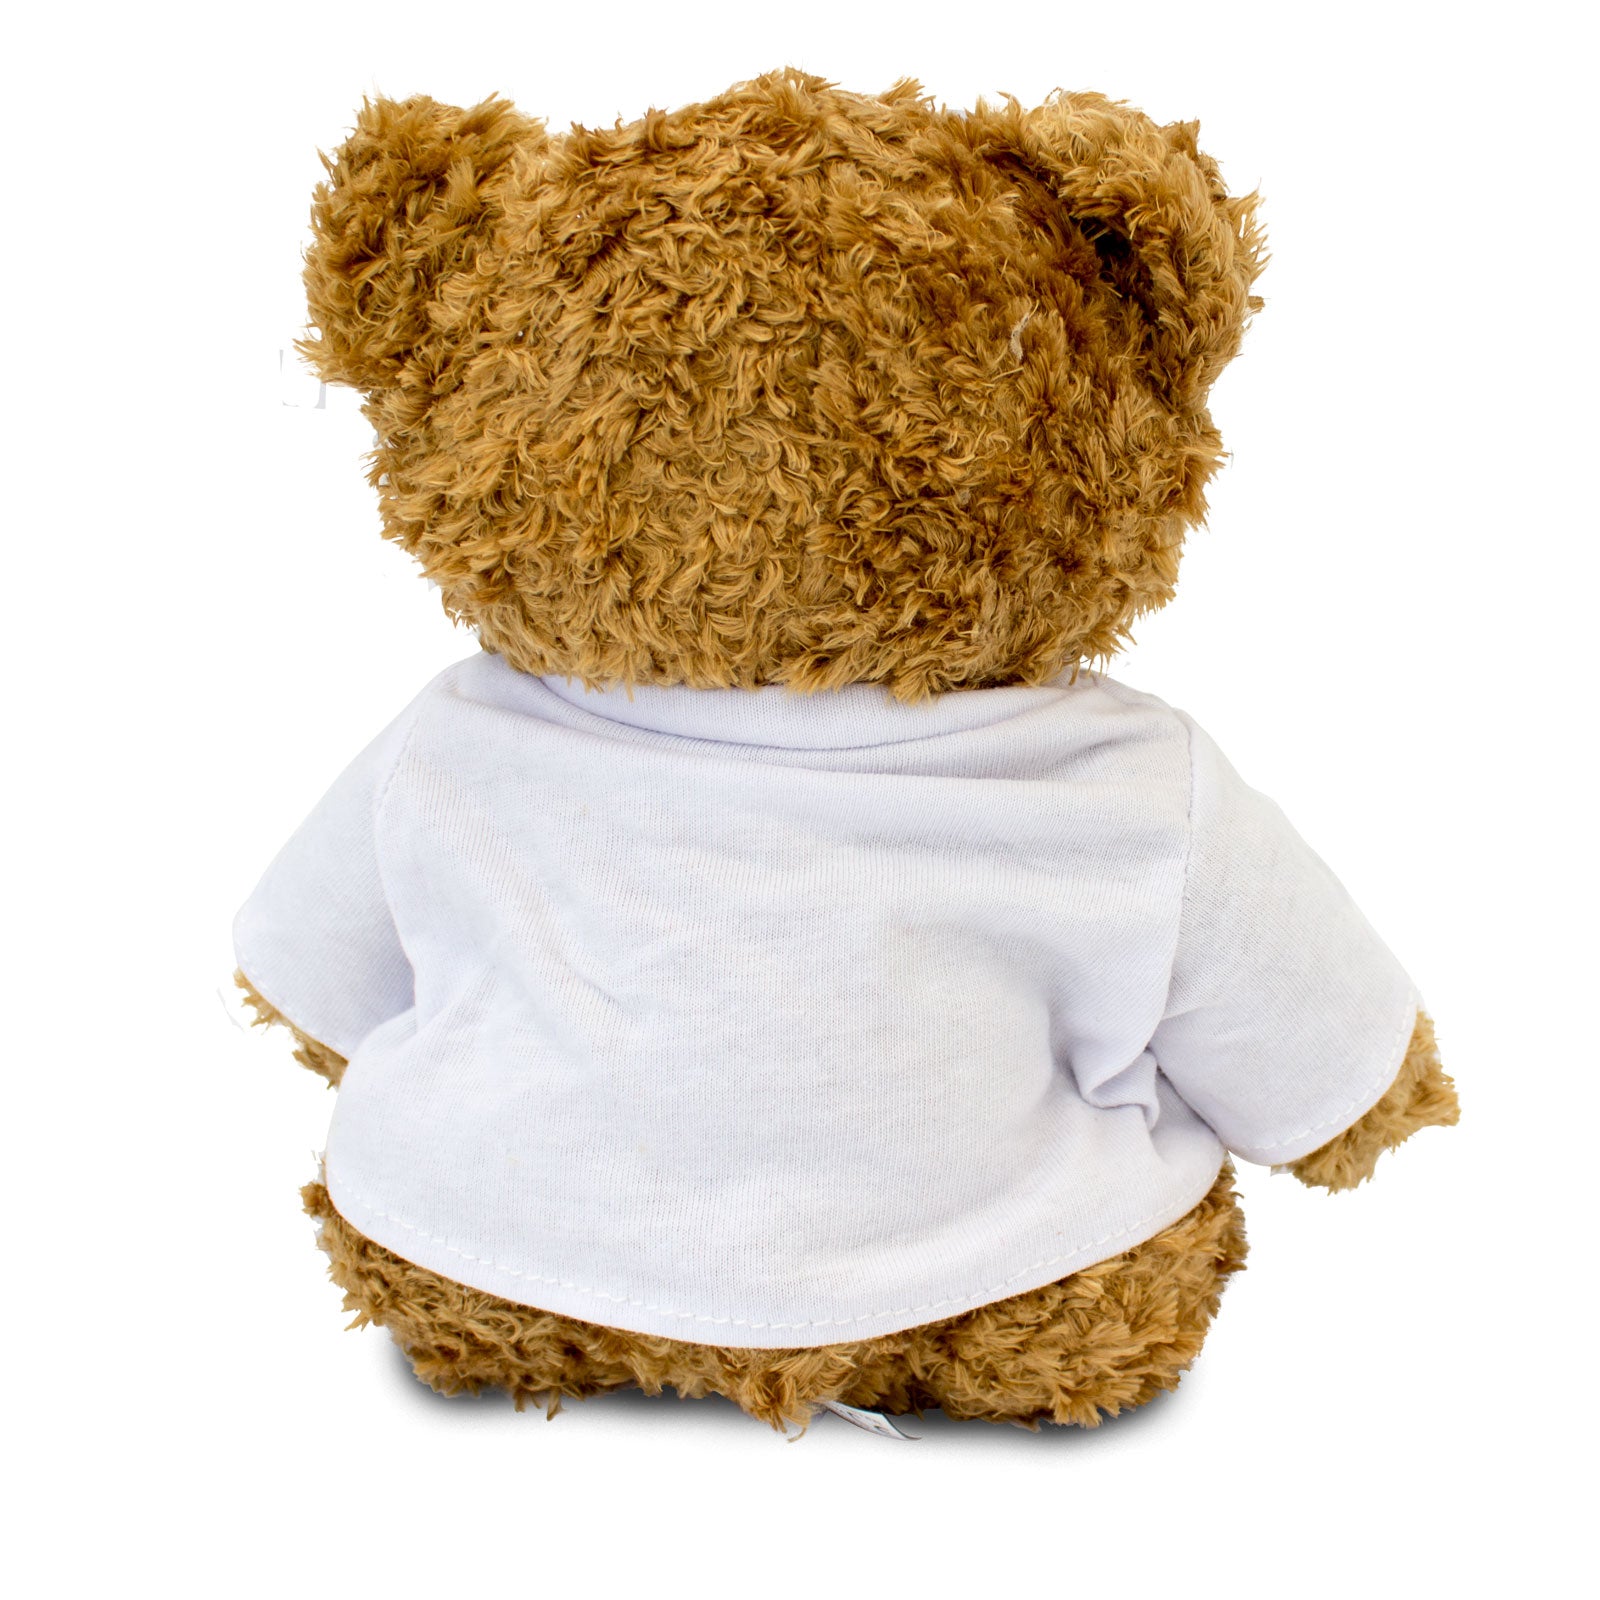 The Greatest Stock Broker Ever - Teddy Bear